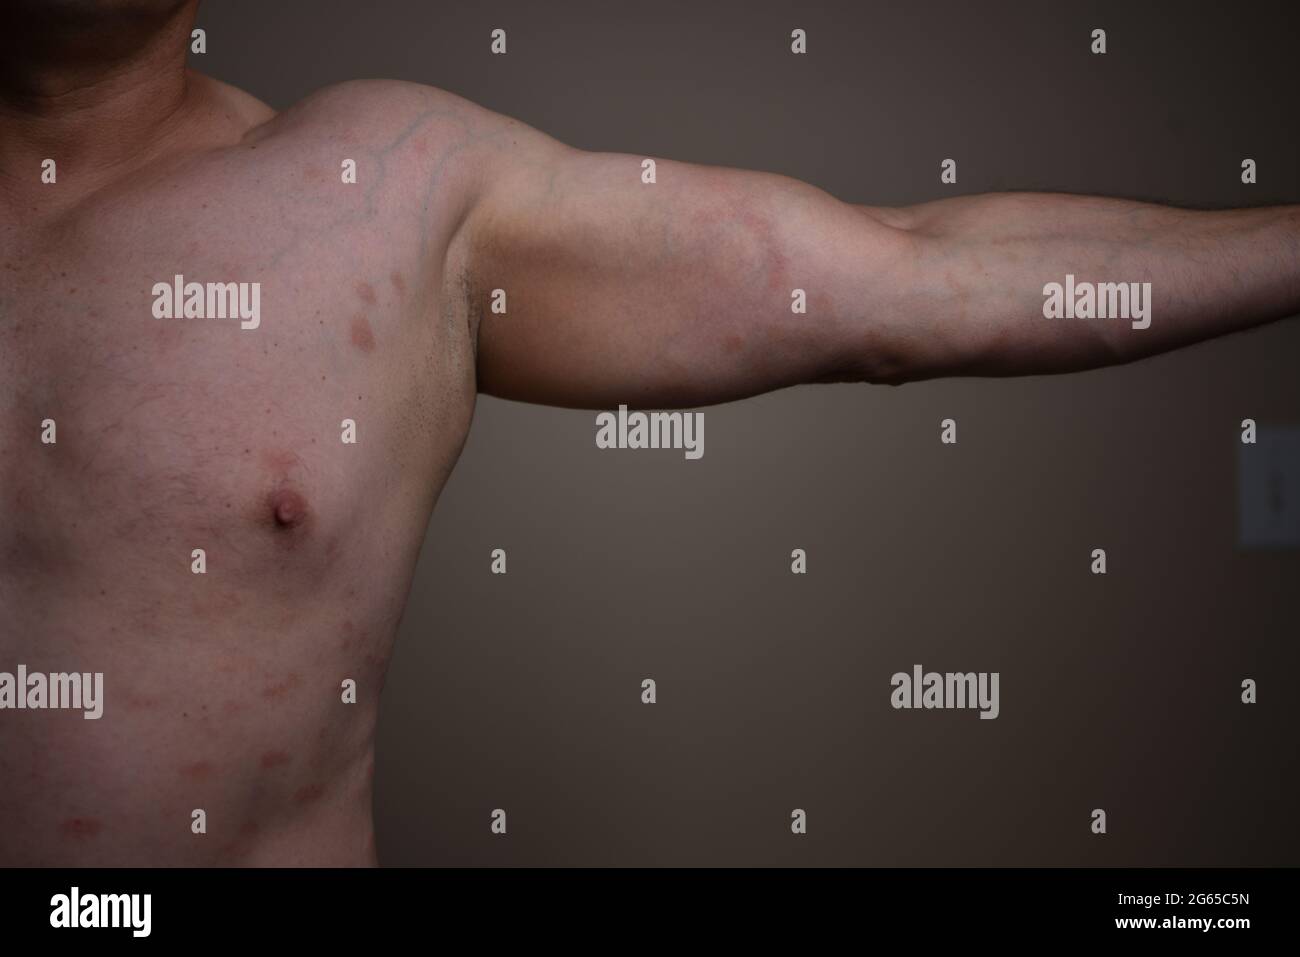 Diagnosis of skin diseases - allergies, psoriasis, eczema, dermatitis. Stock Photo